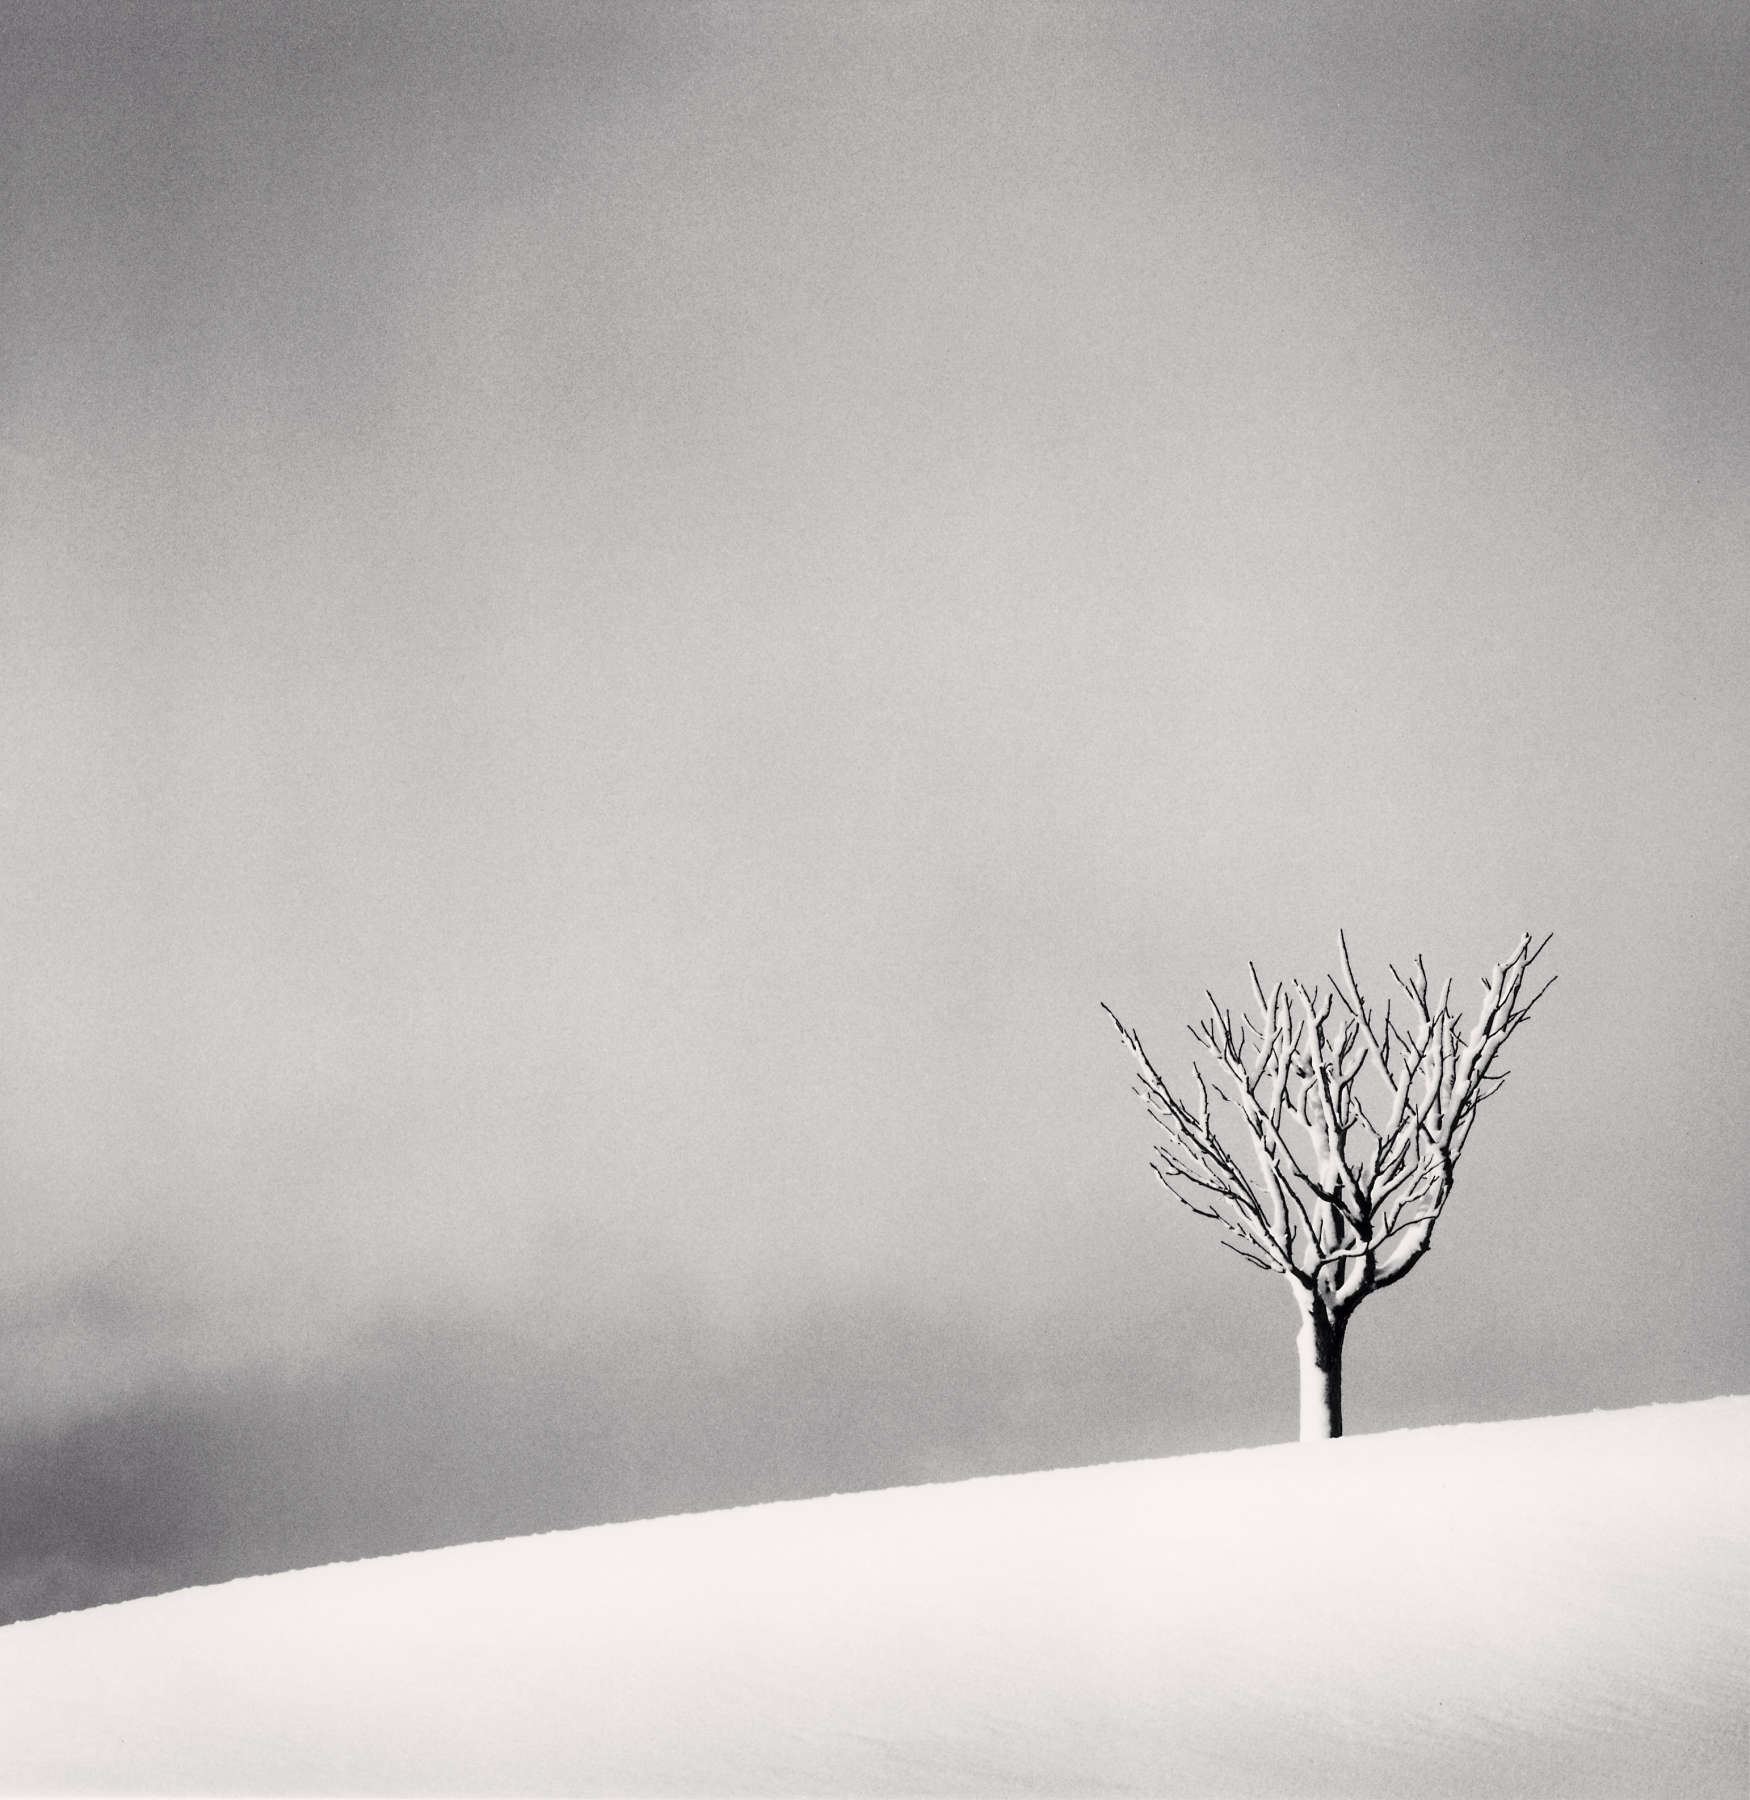 Michael Kenna, Snowfall, Numakawa, Hokkaido, Japan, 2004 - Artwork